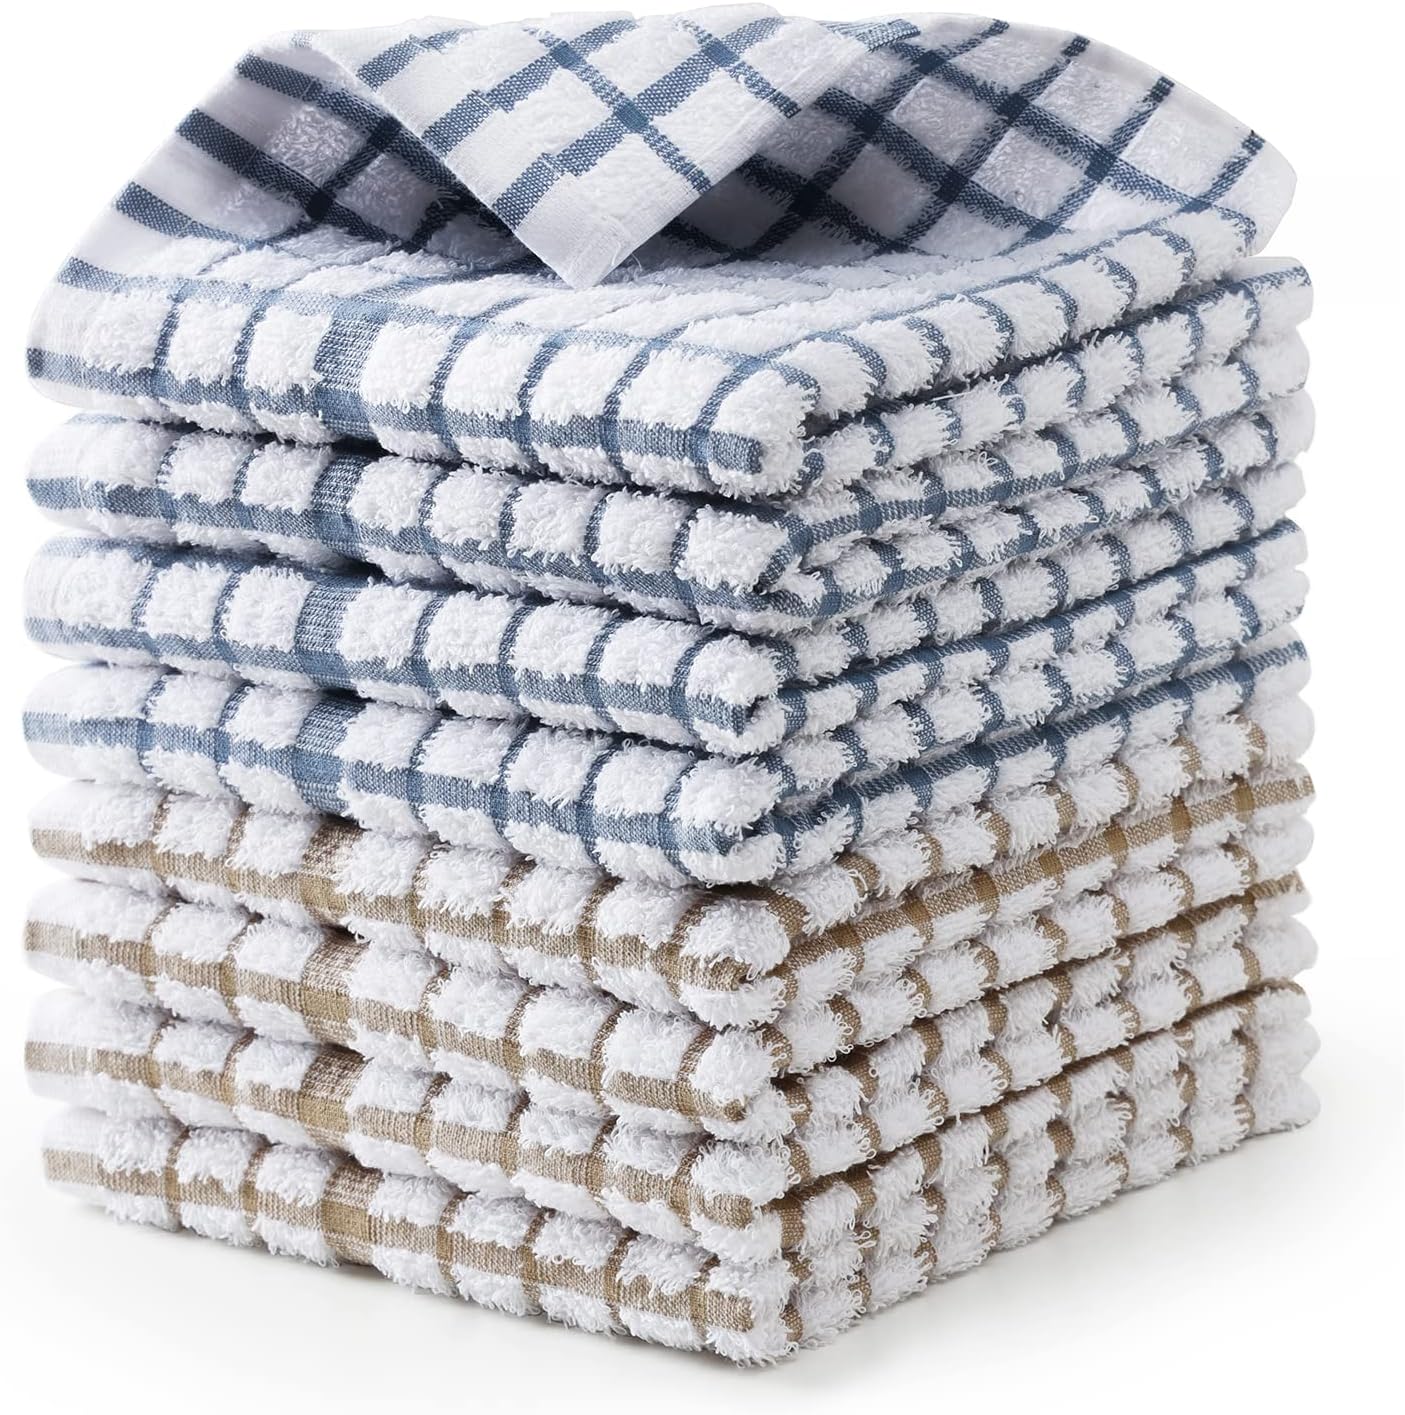 Kitchen Dish Towels, Bulk Cotton Kitchen Hand Towels, 5 Pack Dishcloth